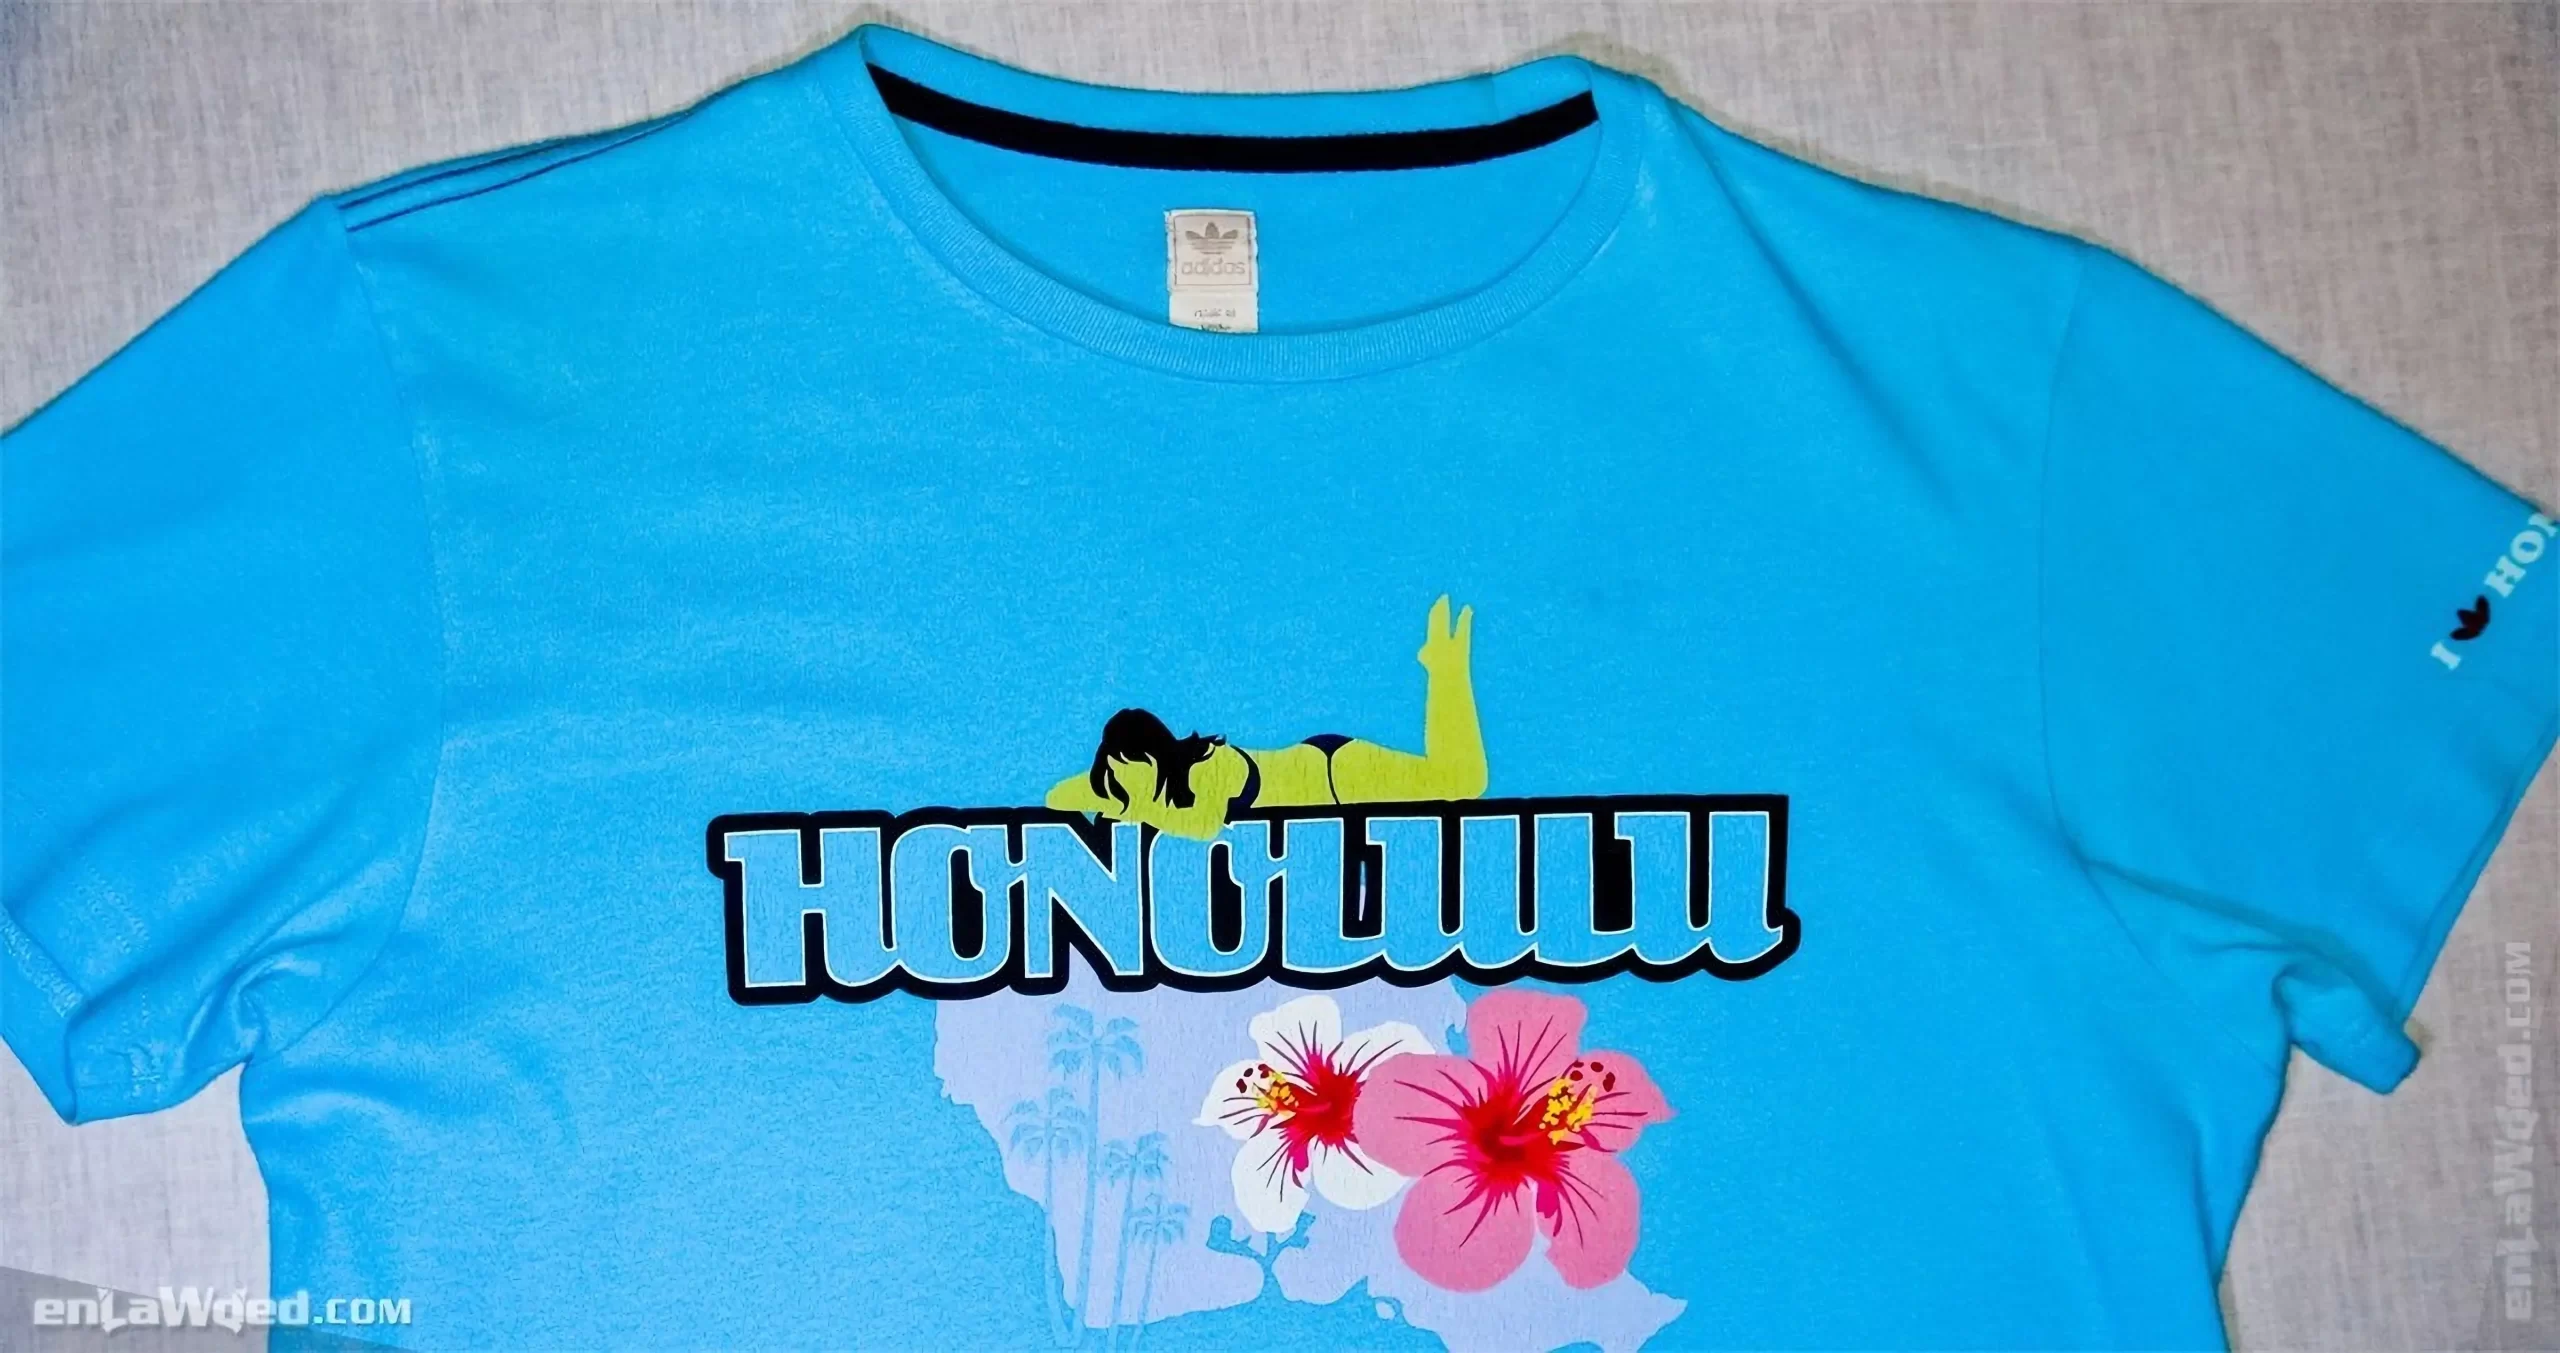 Men’s 2007 Honolulu Hawaï TS by Adidas Originals: Eager (EnLawded.com file #lmc5ut1d0bupyy0w0m4e)